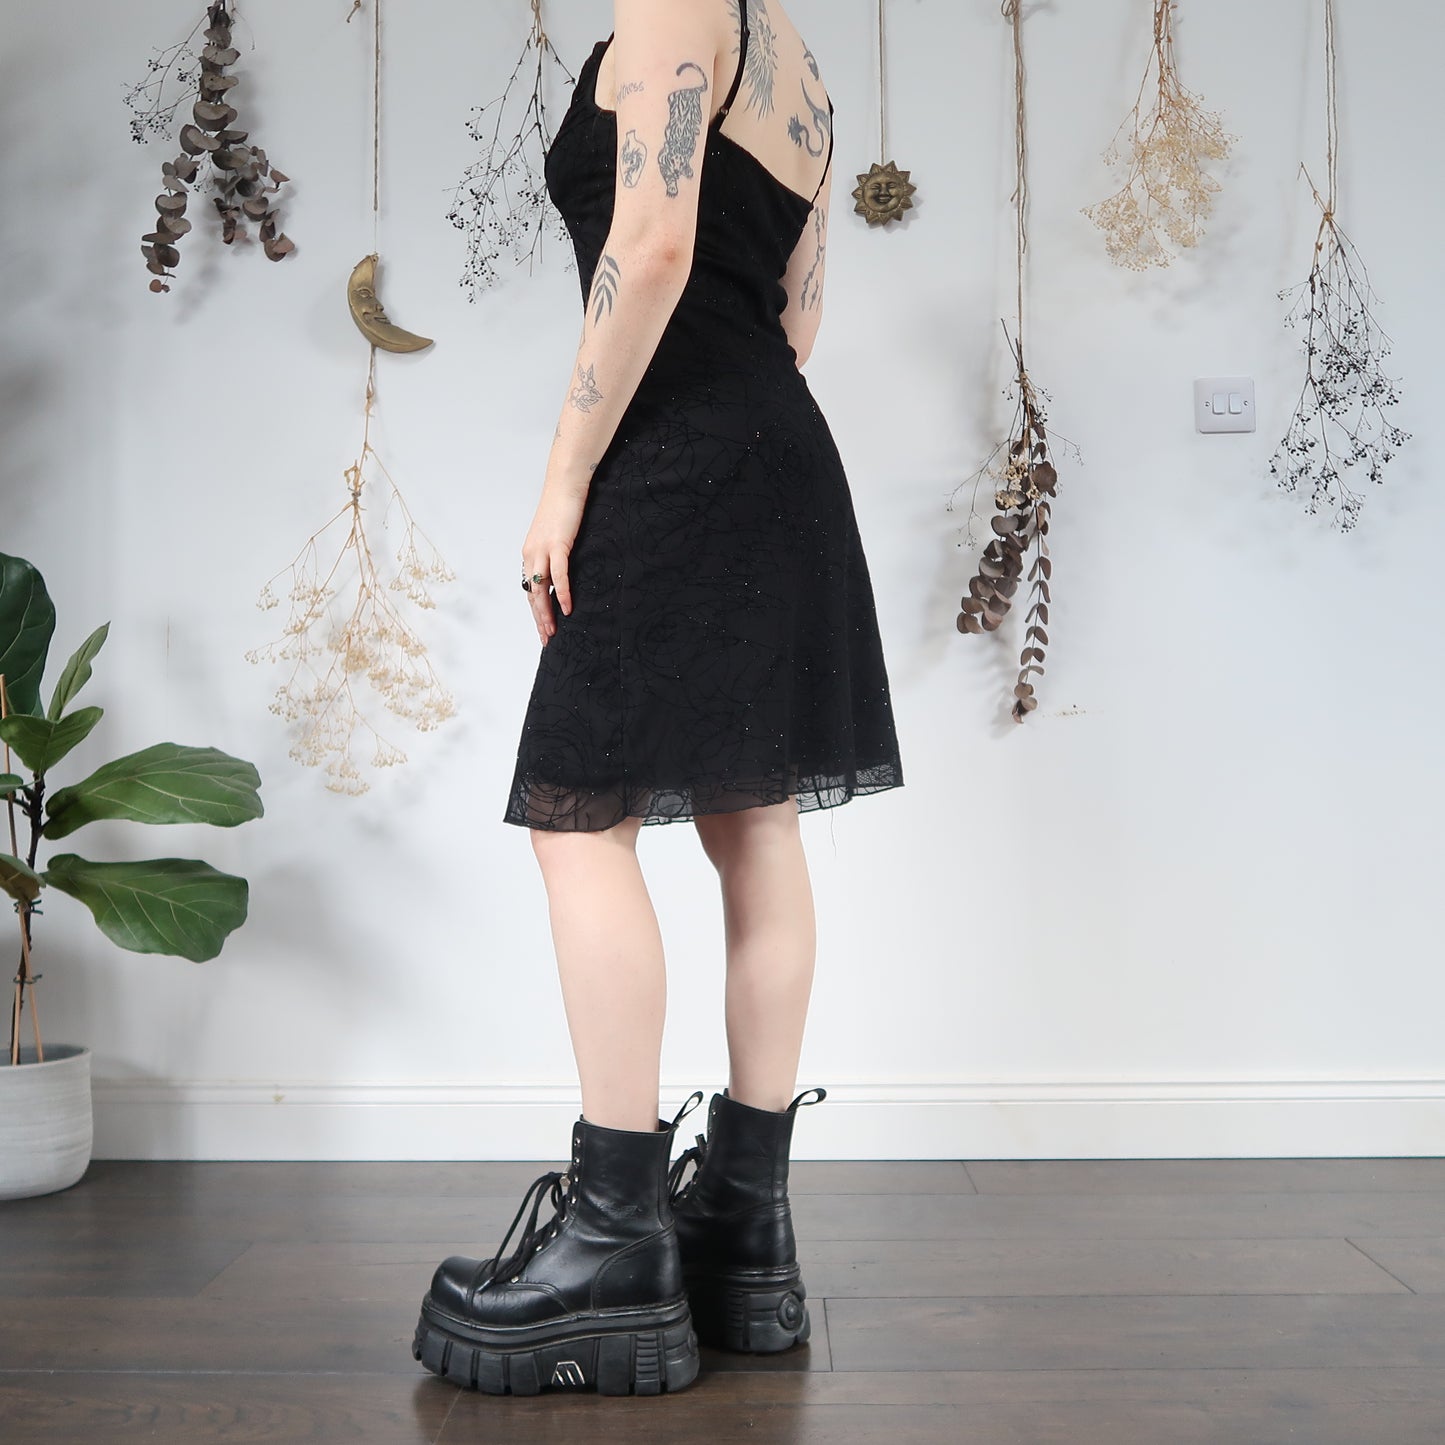 Black mesh dress - size S/M